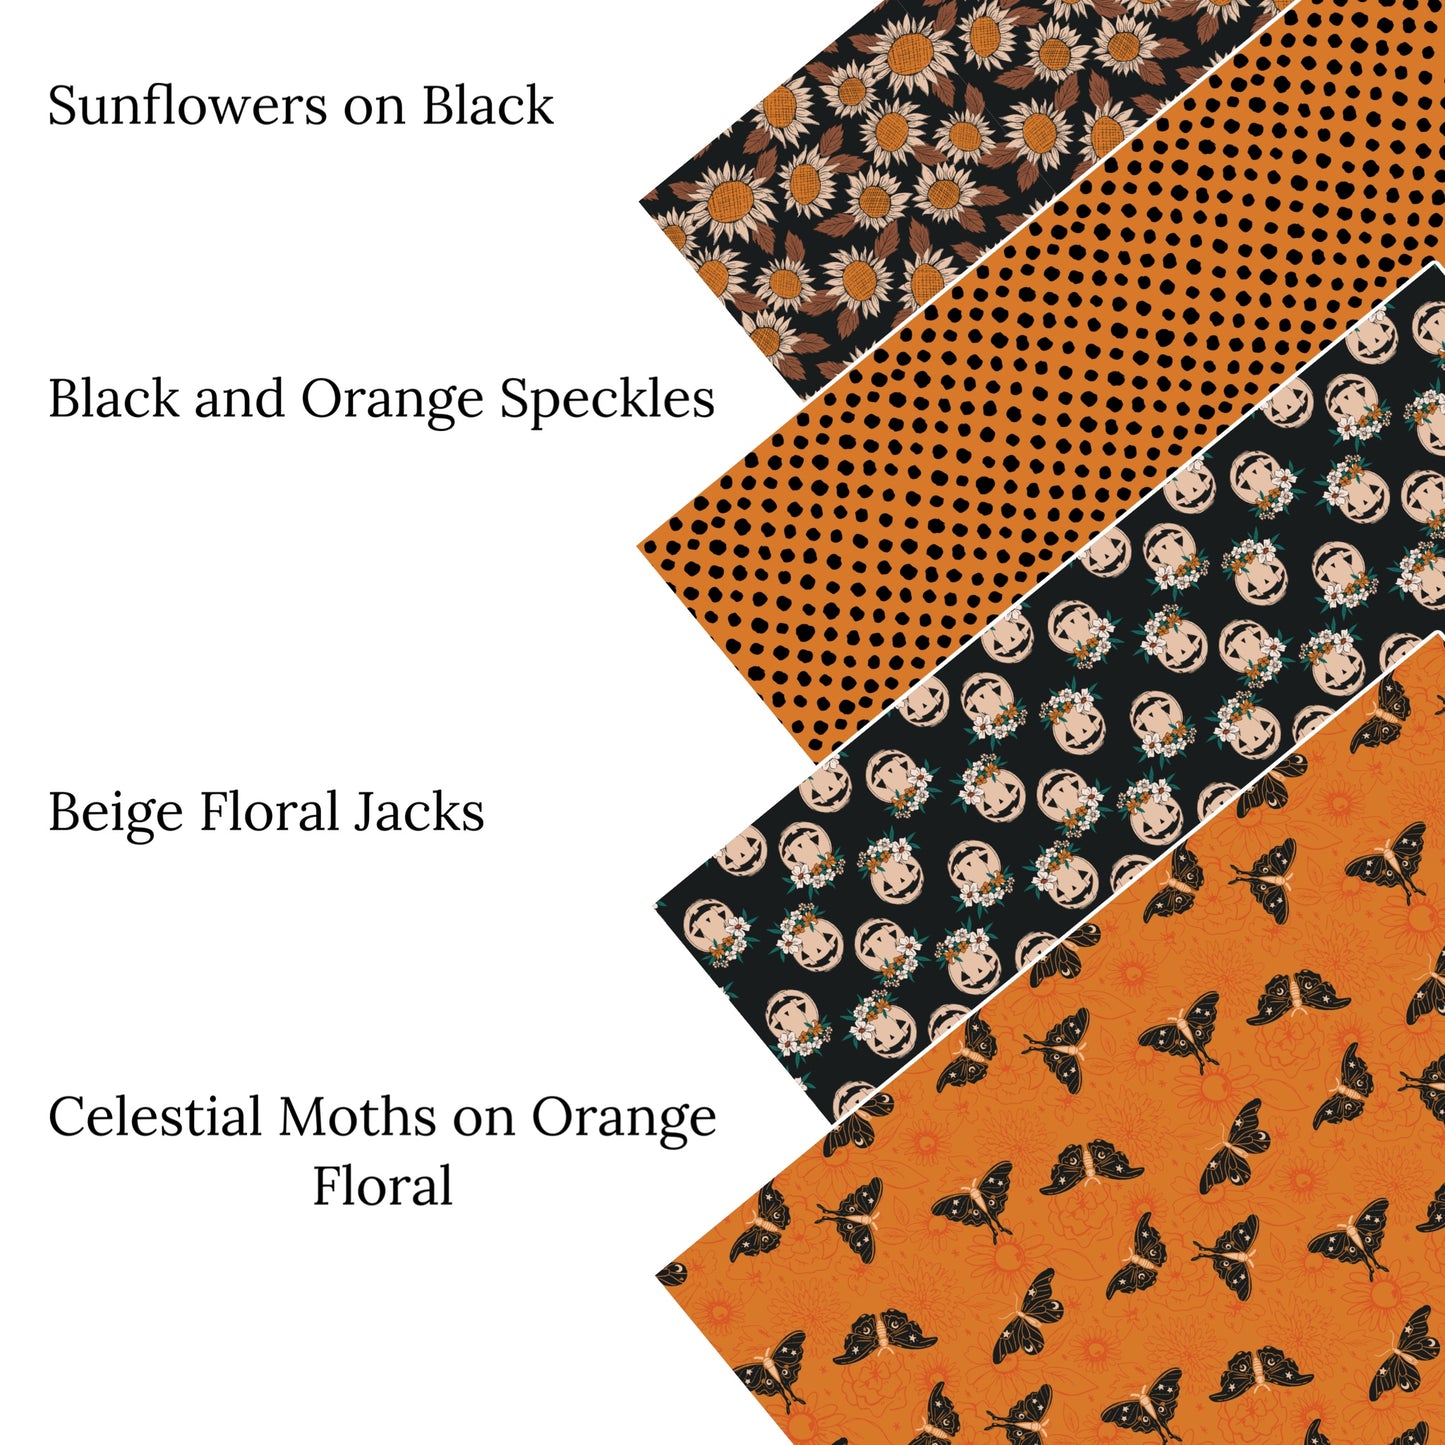 Celestial Moths on Floral Orange Faux Leather Sheets